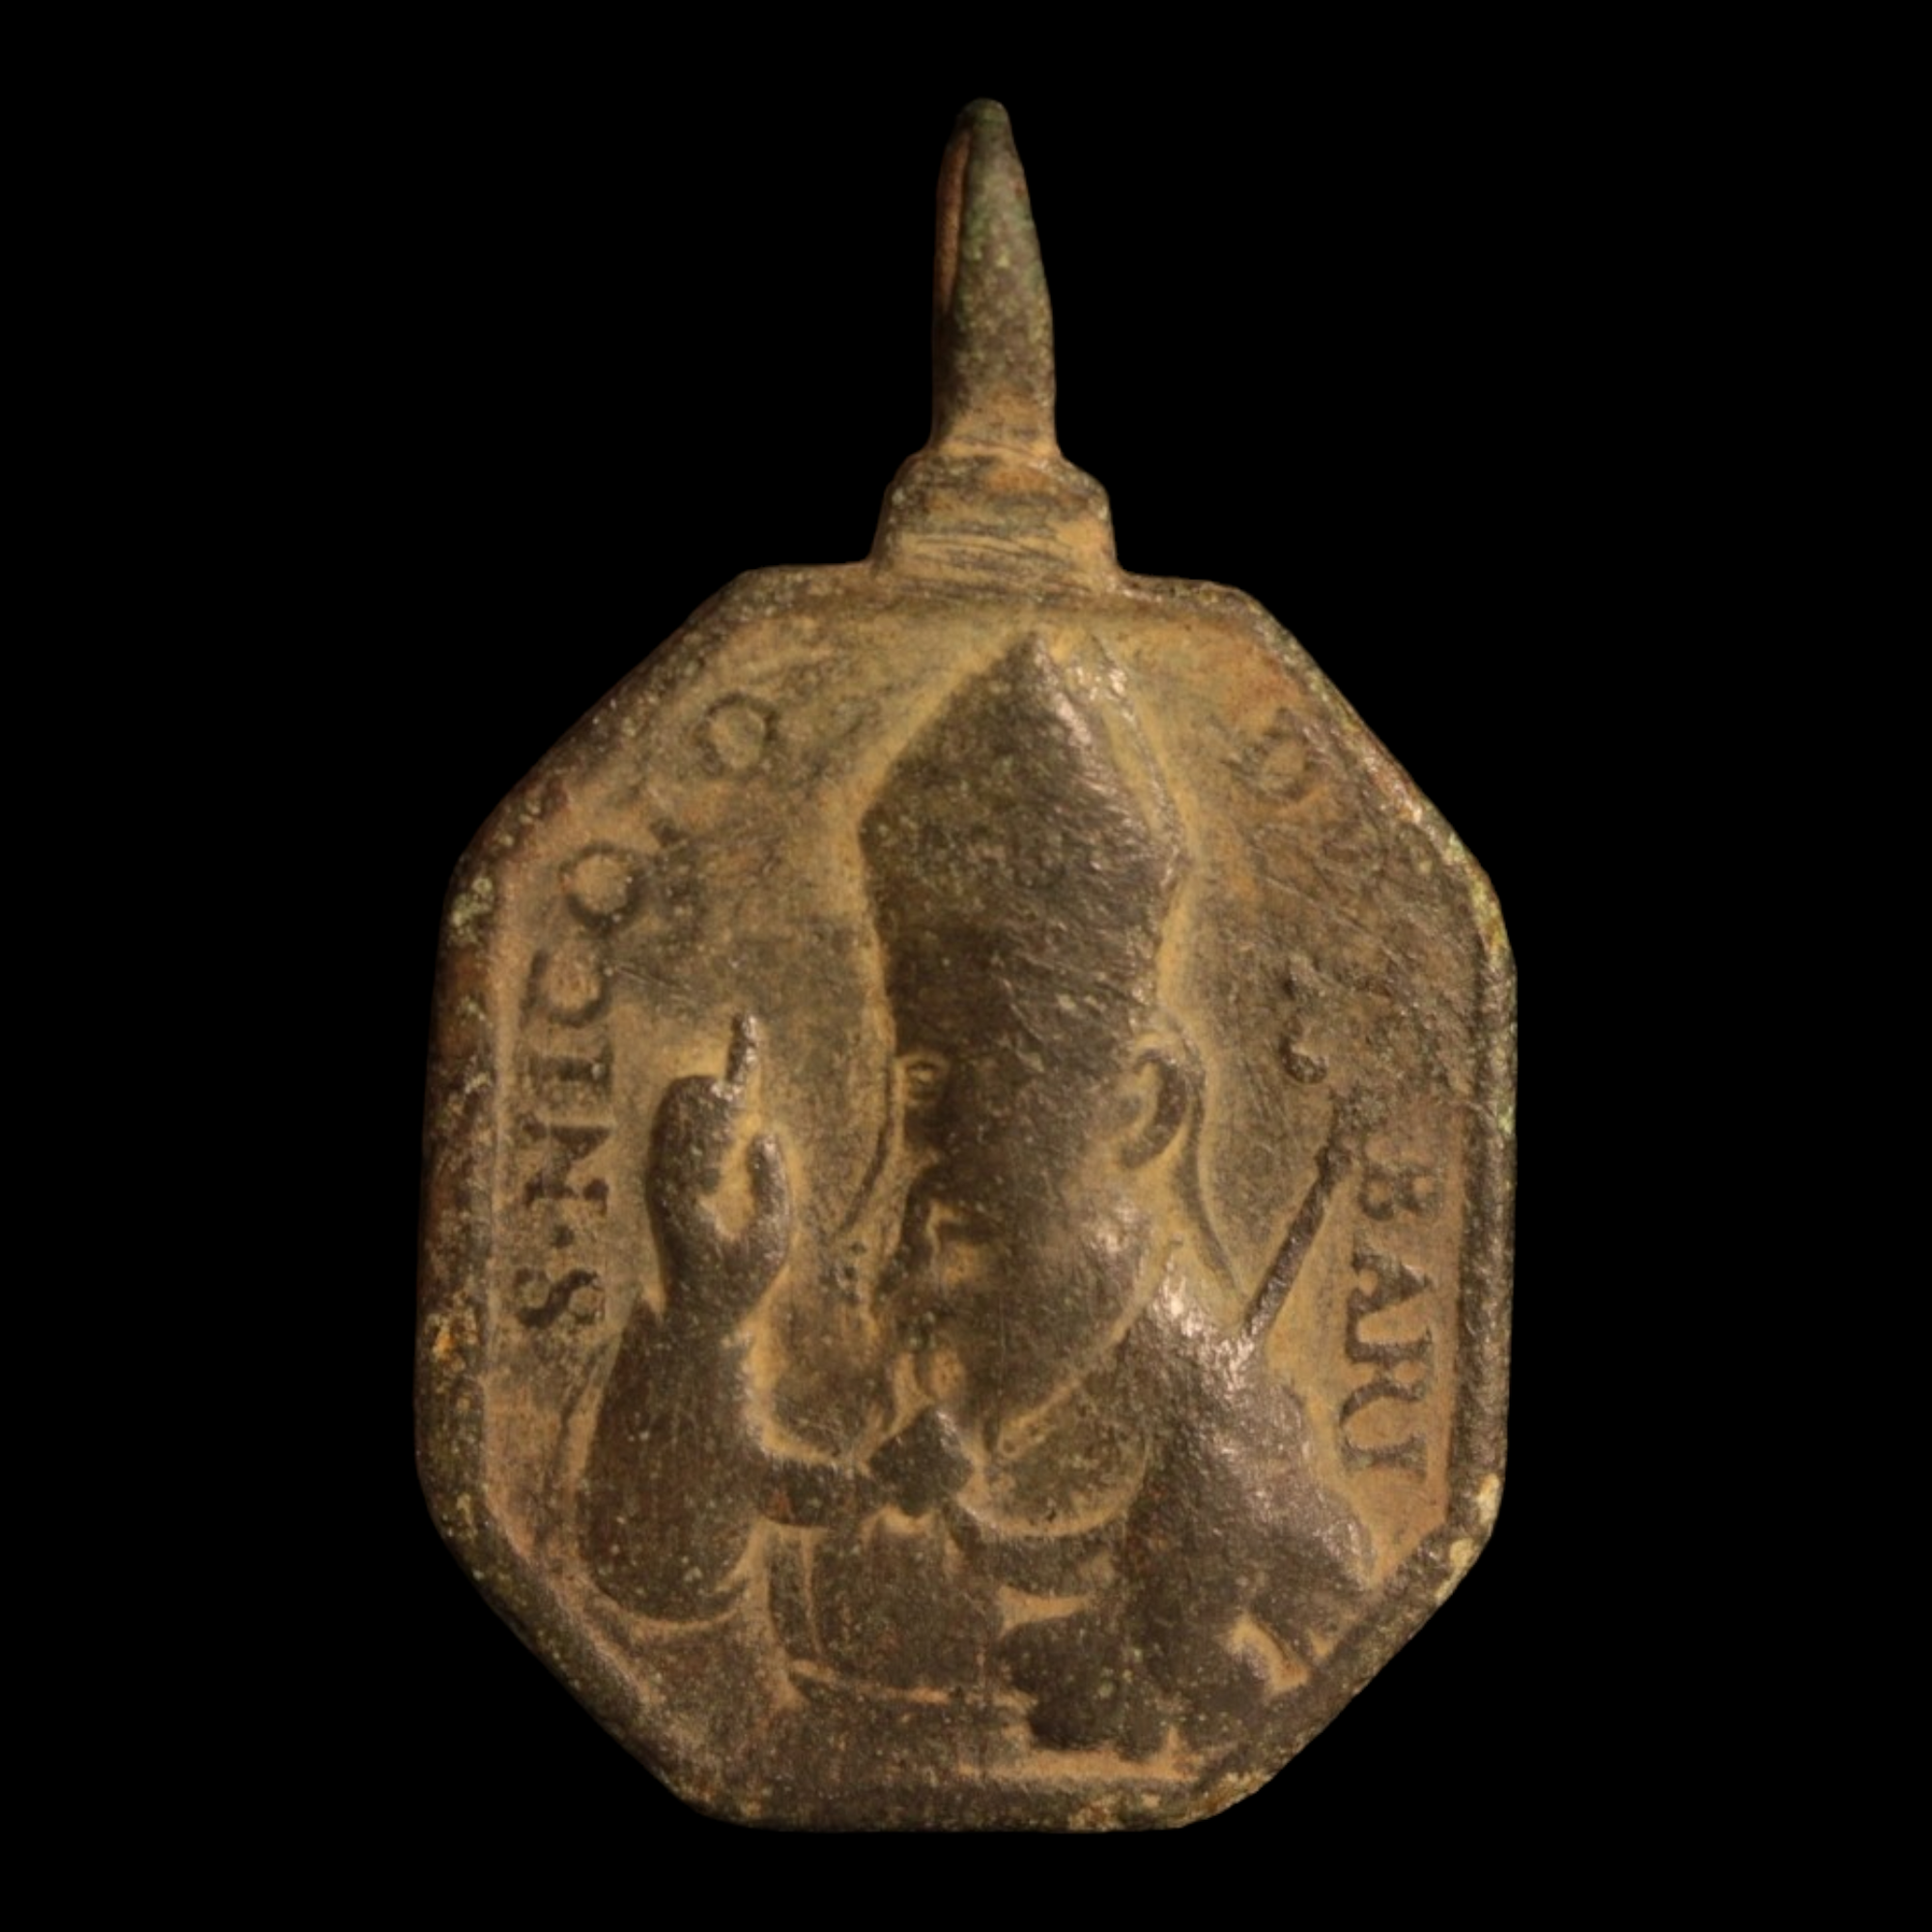 Religious Medal, Catholic Church, St. Nicholas, 33mm - 1500s to 1700s - Spanish Empire